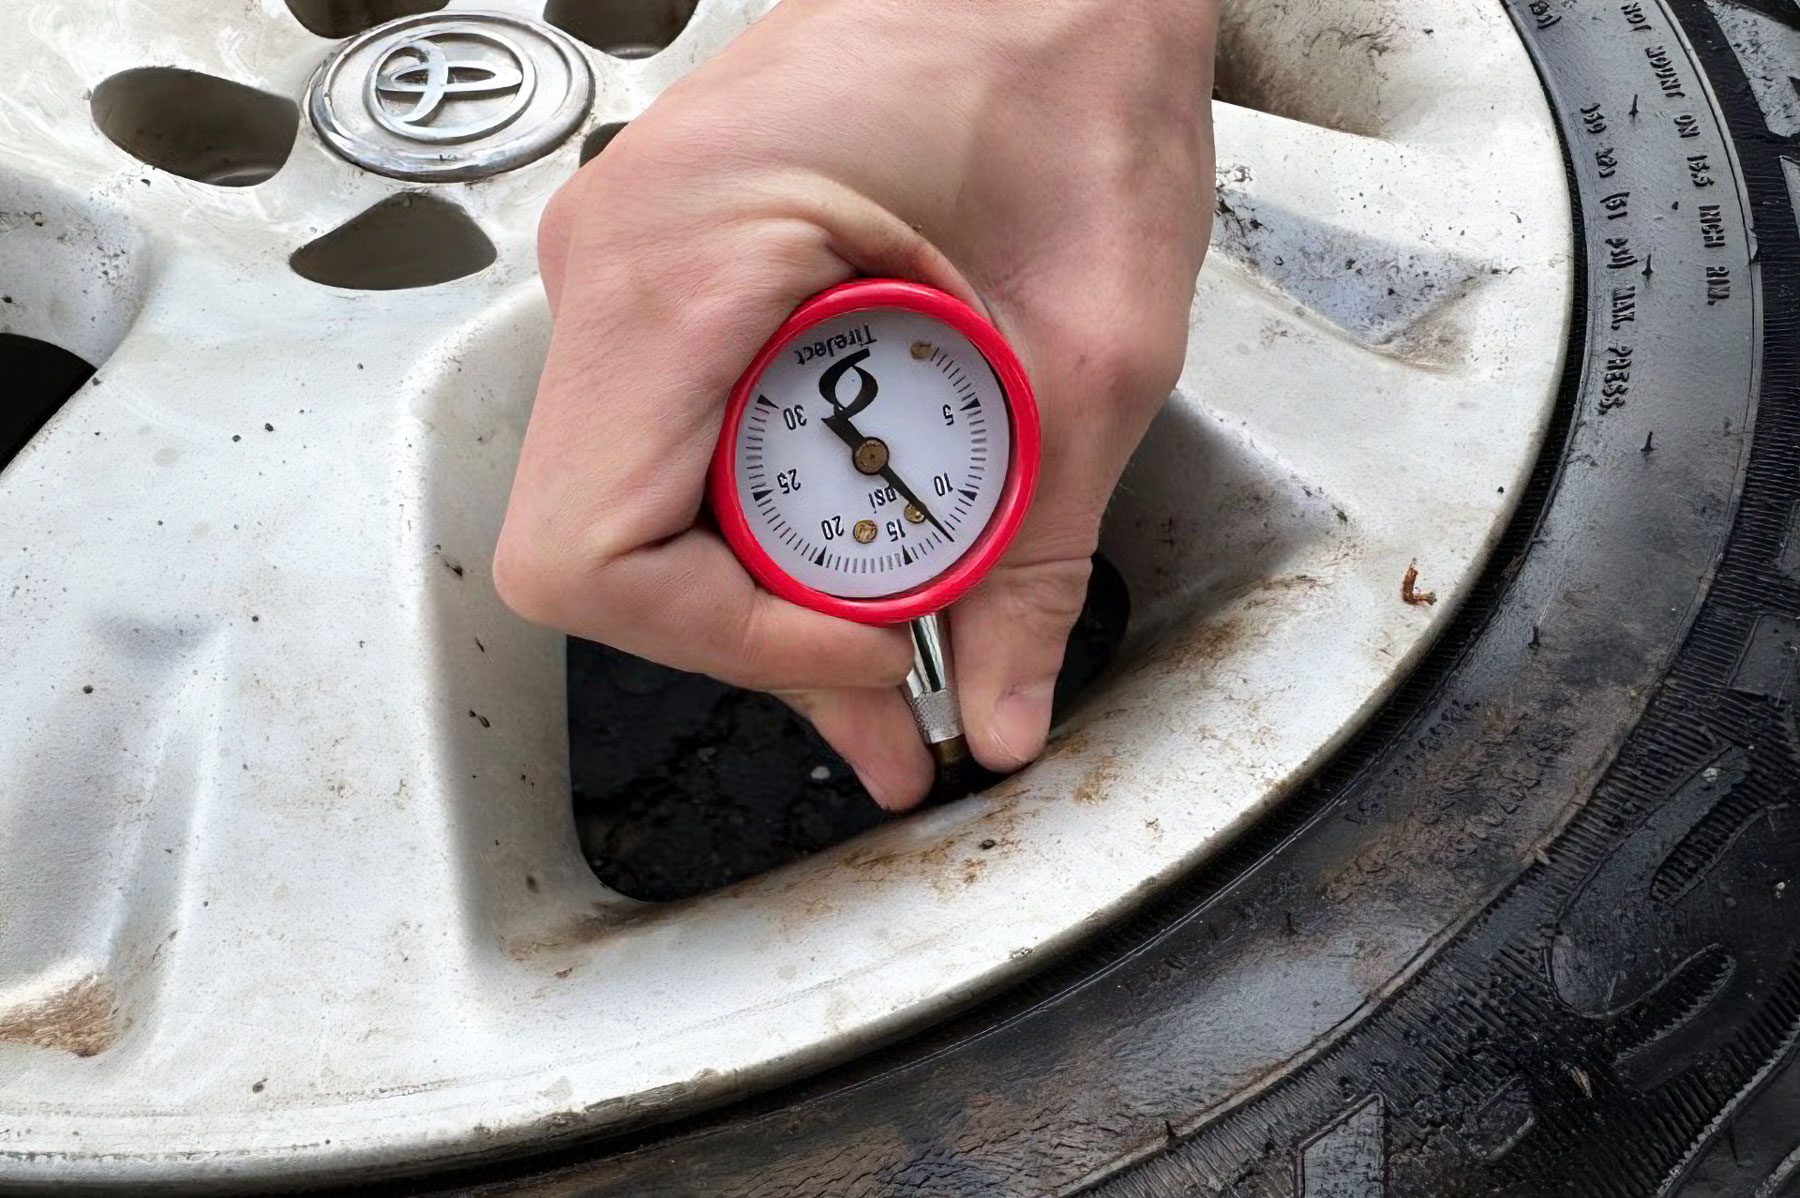 Checking the air in a tire through a tire pressure gauge